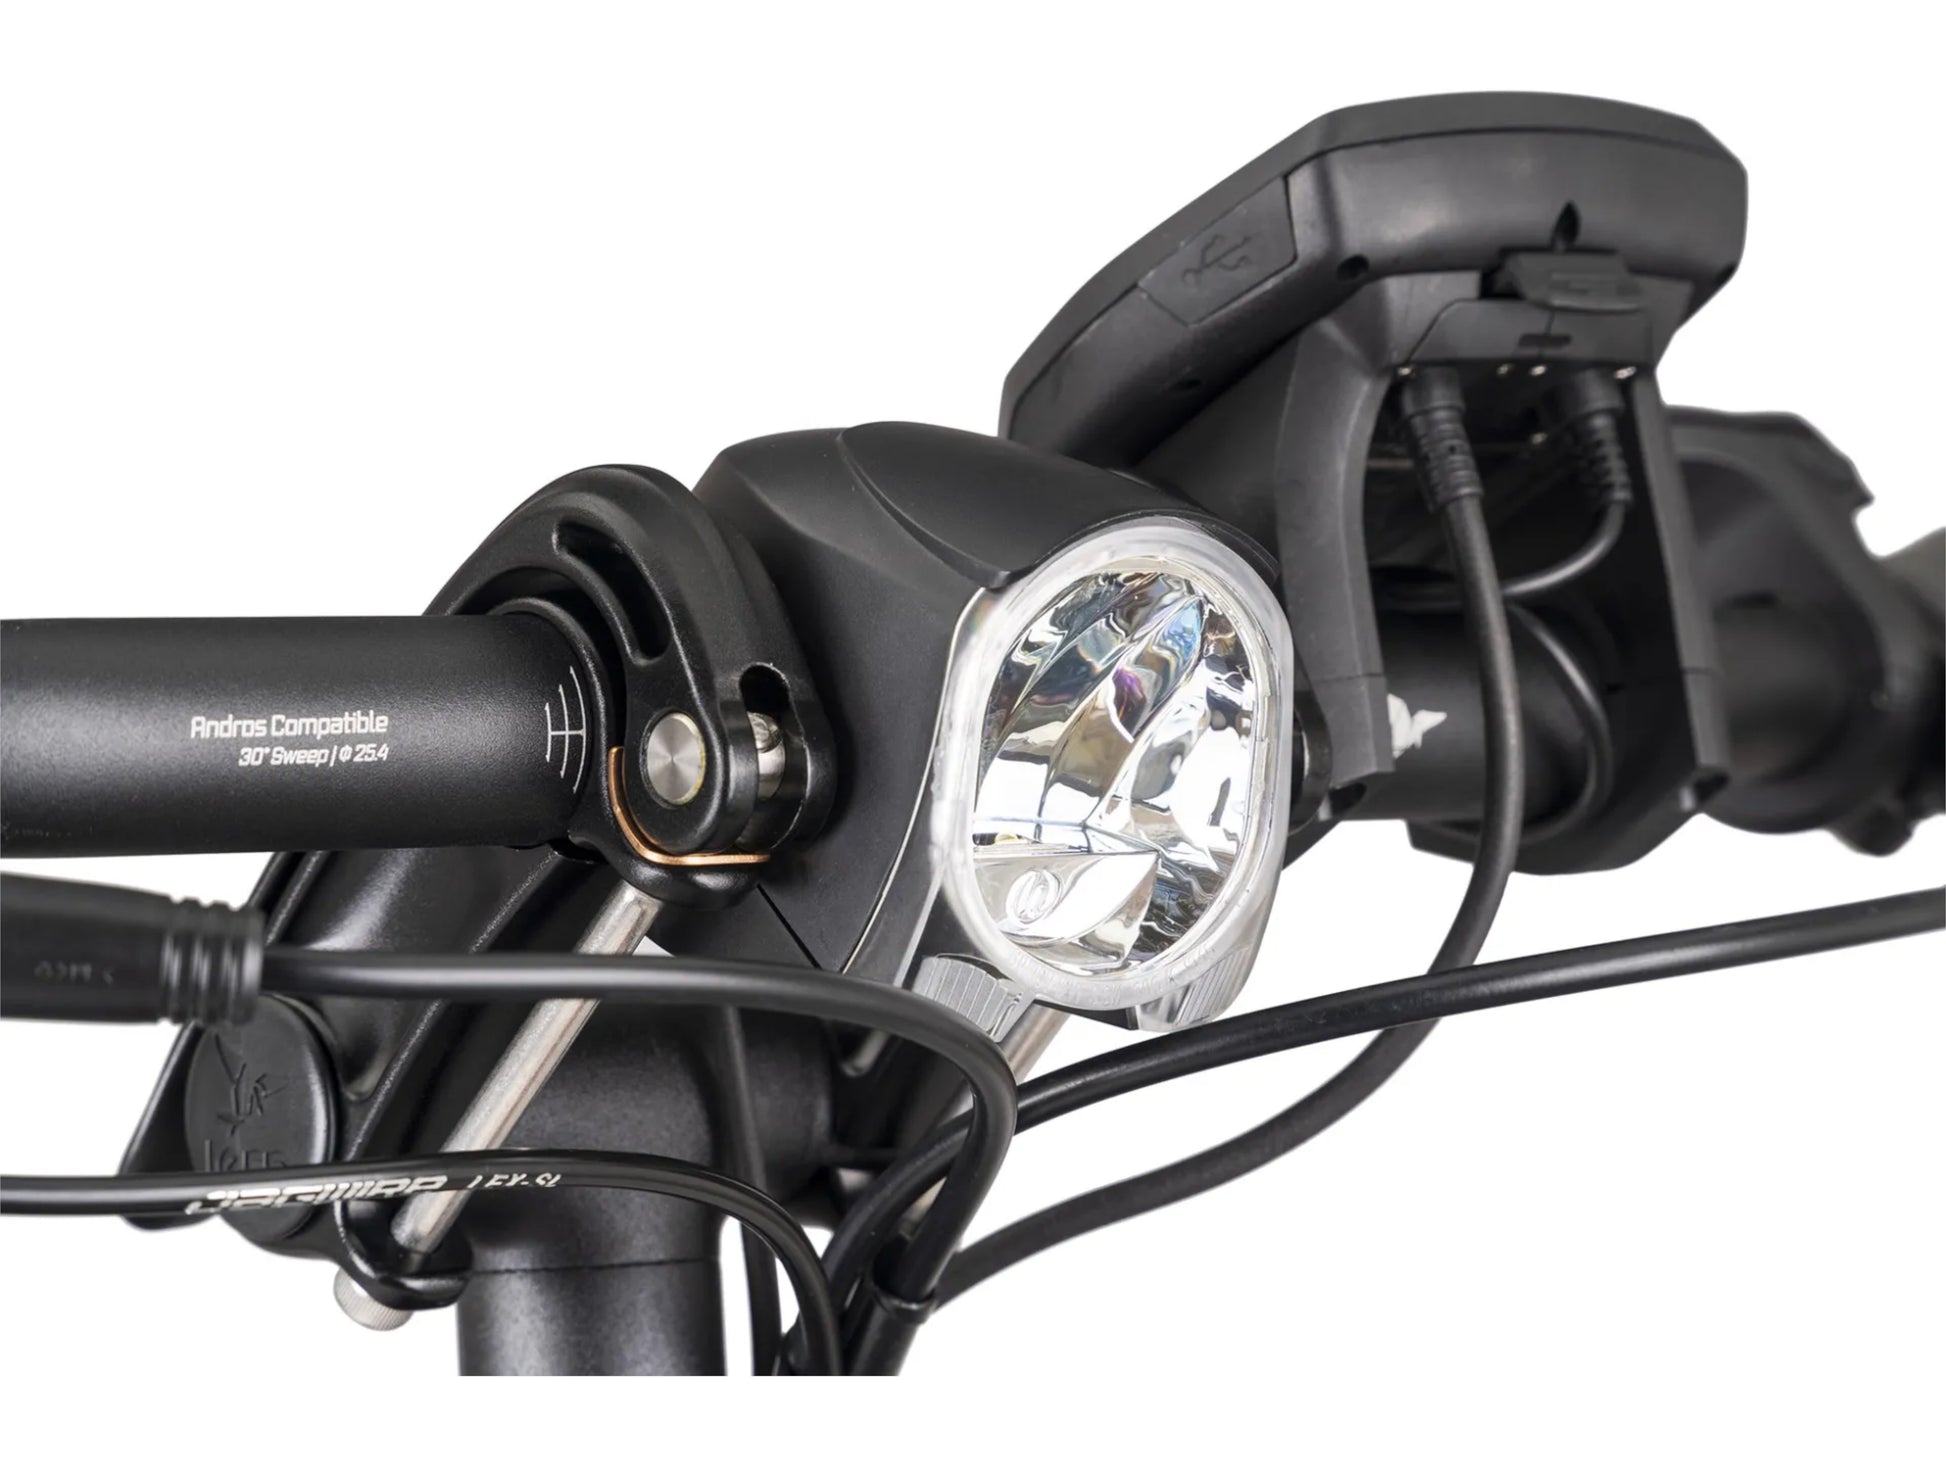 Tern NBD P8i electric cargo bike close up Valo headlight headset